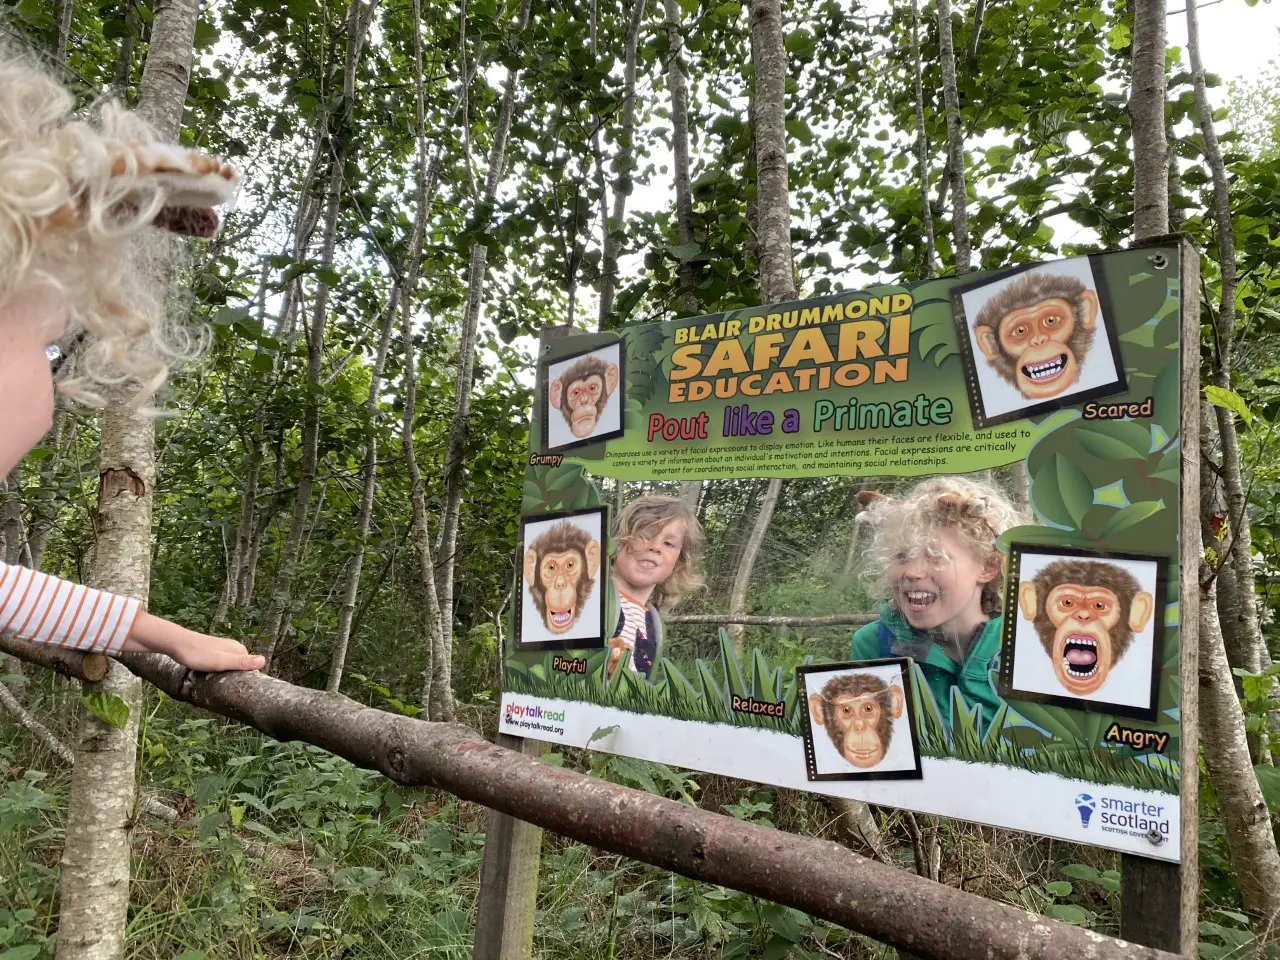 Blairdrummond safari park making chimp faces